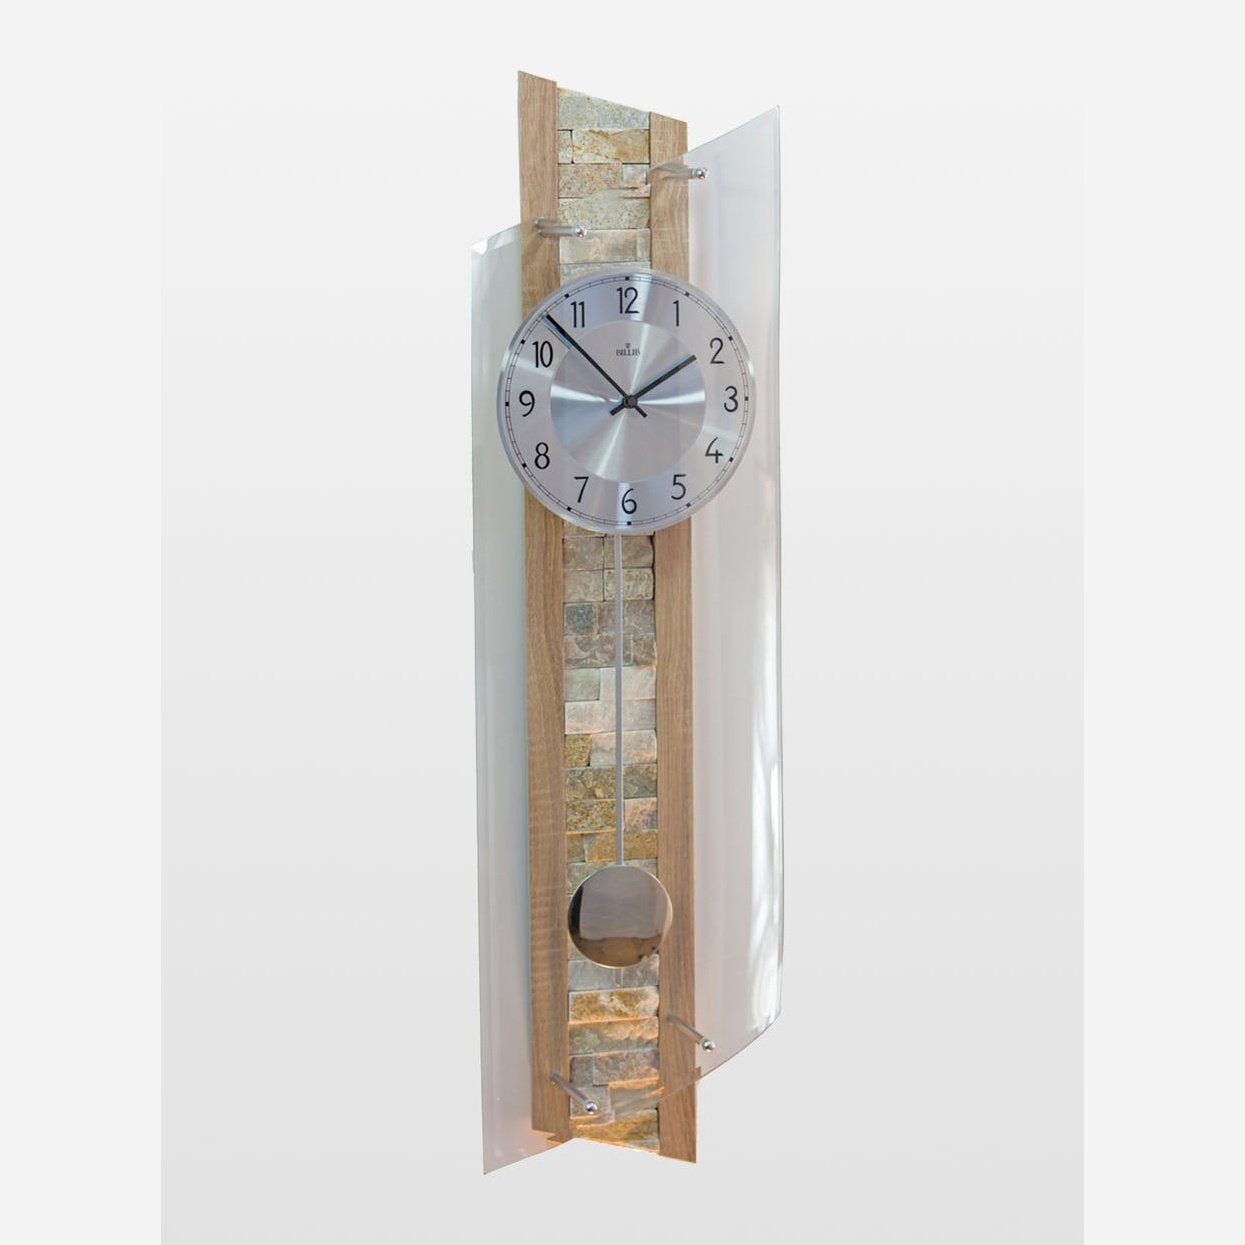 QC 9141 Stylish Tiled Radio Controlled Wall Clock - Hunter Furnishing